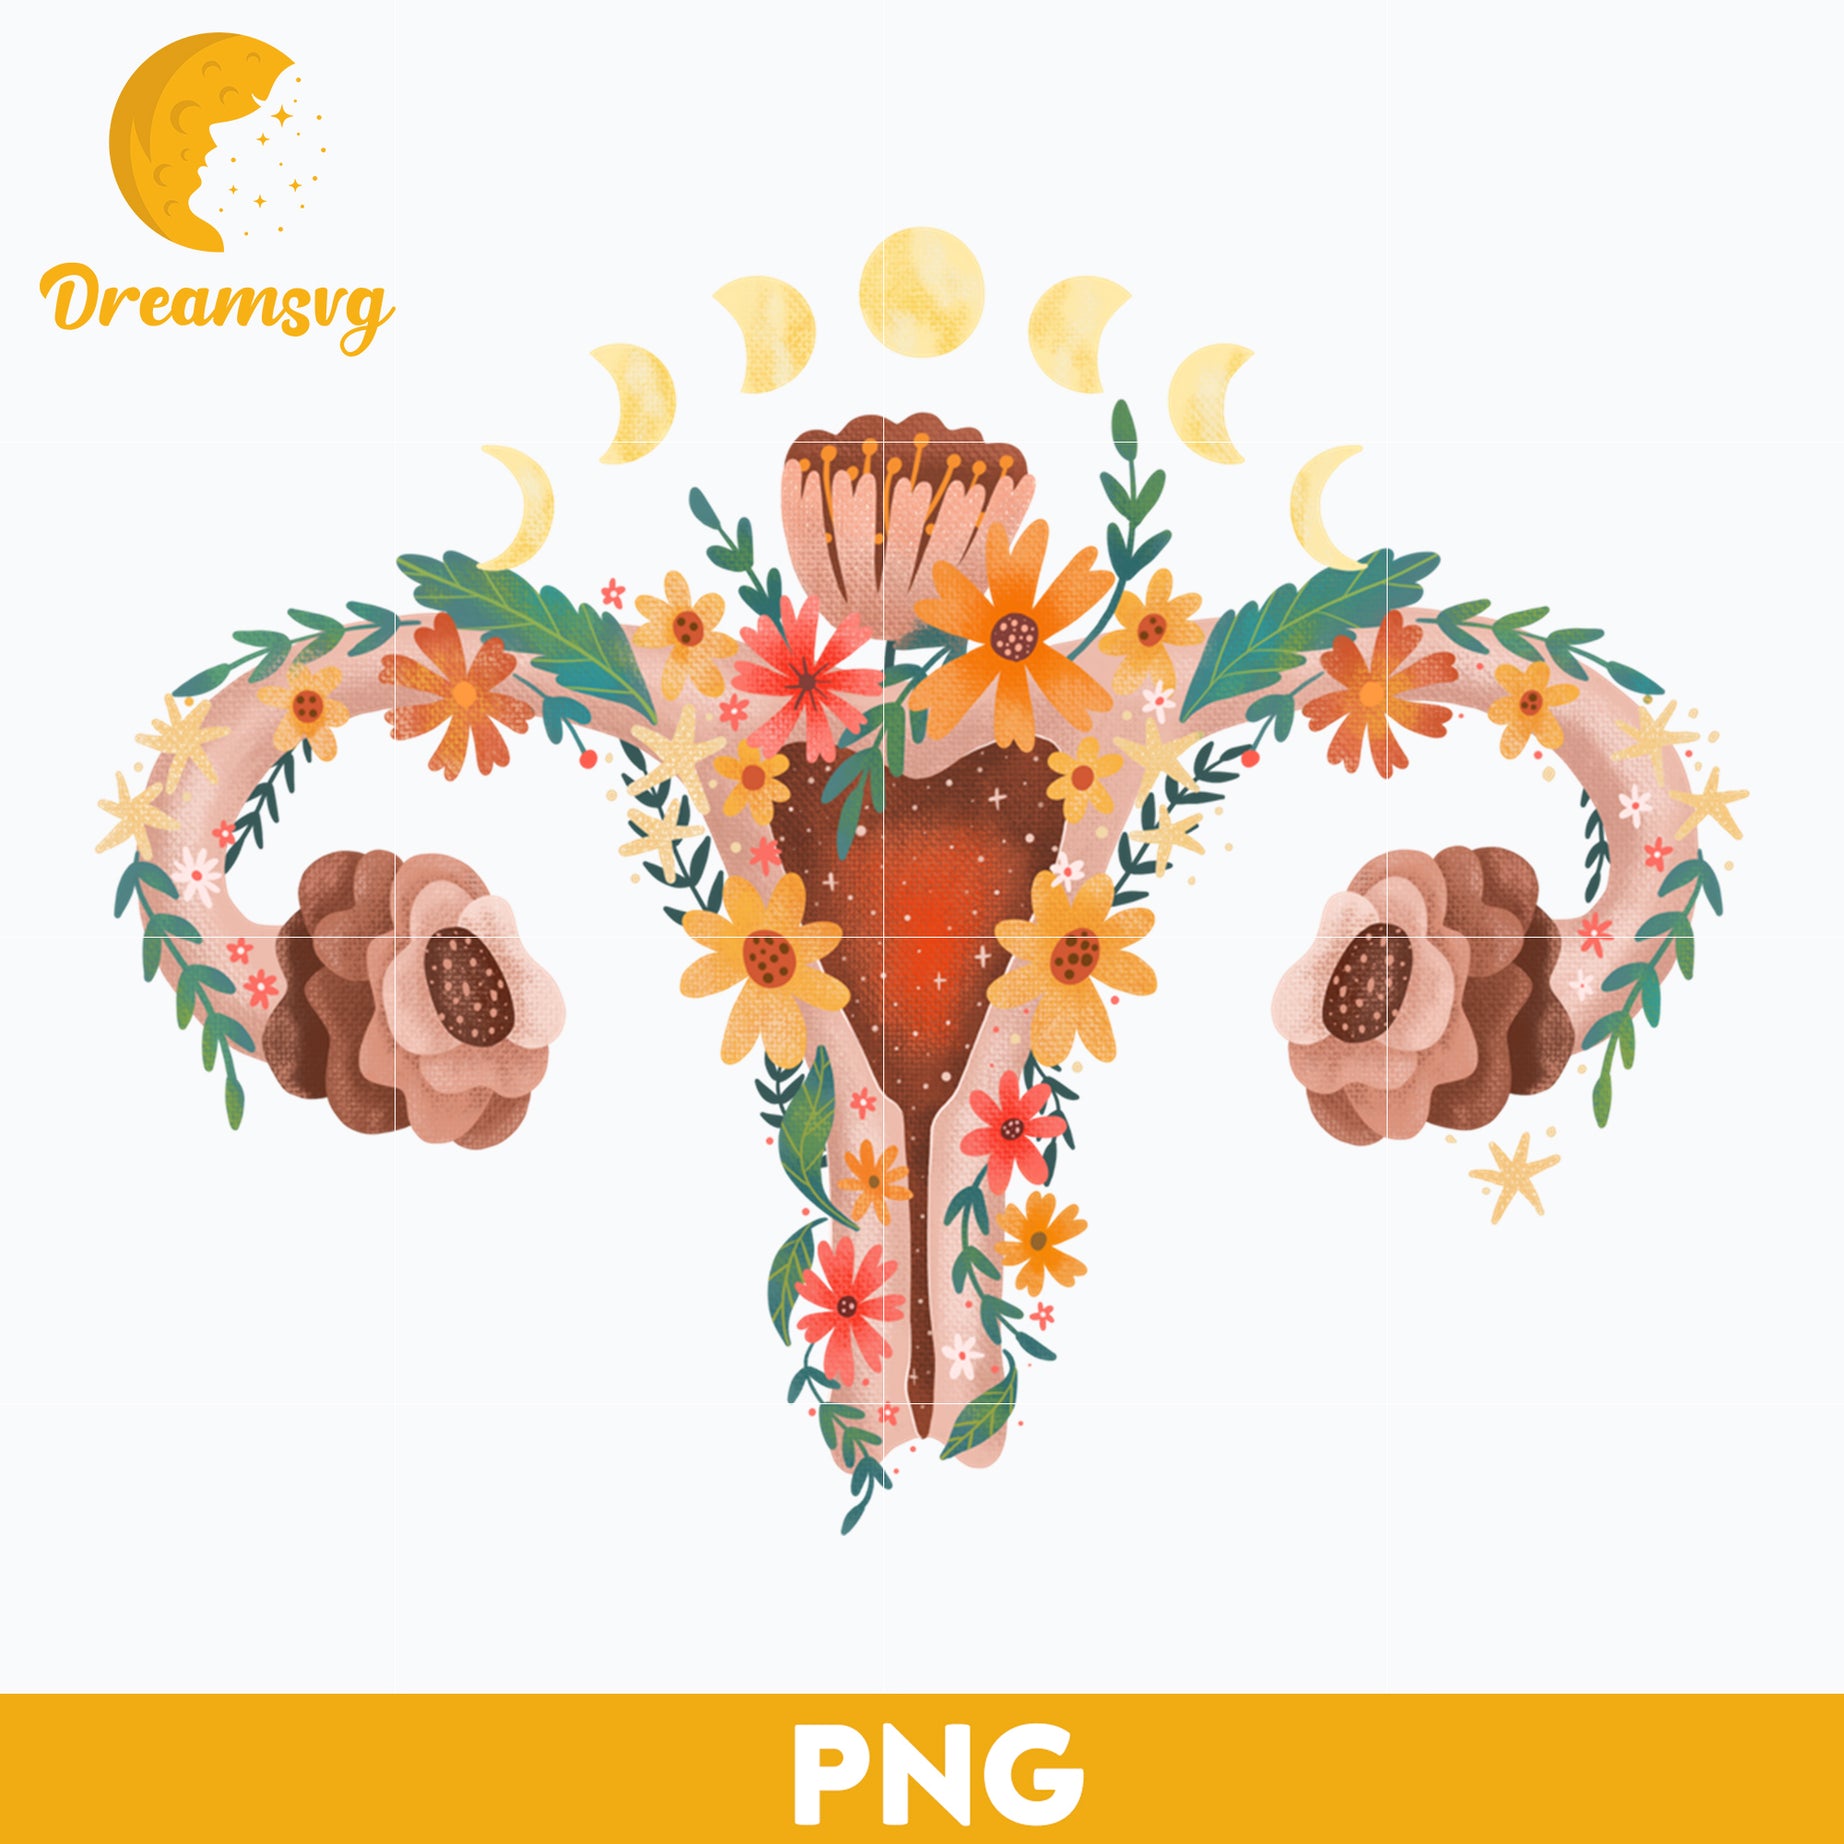 Flower Uturus Sticker PNG, Trending PNG, PNG file, Digital file.